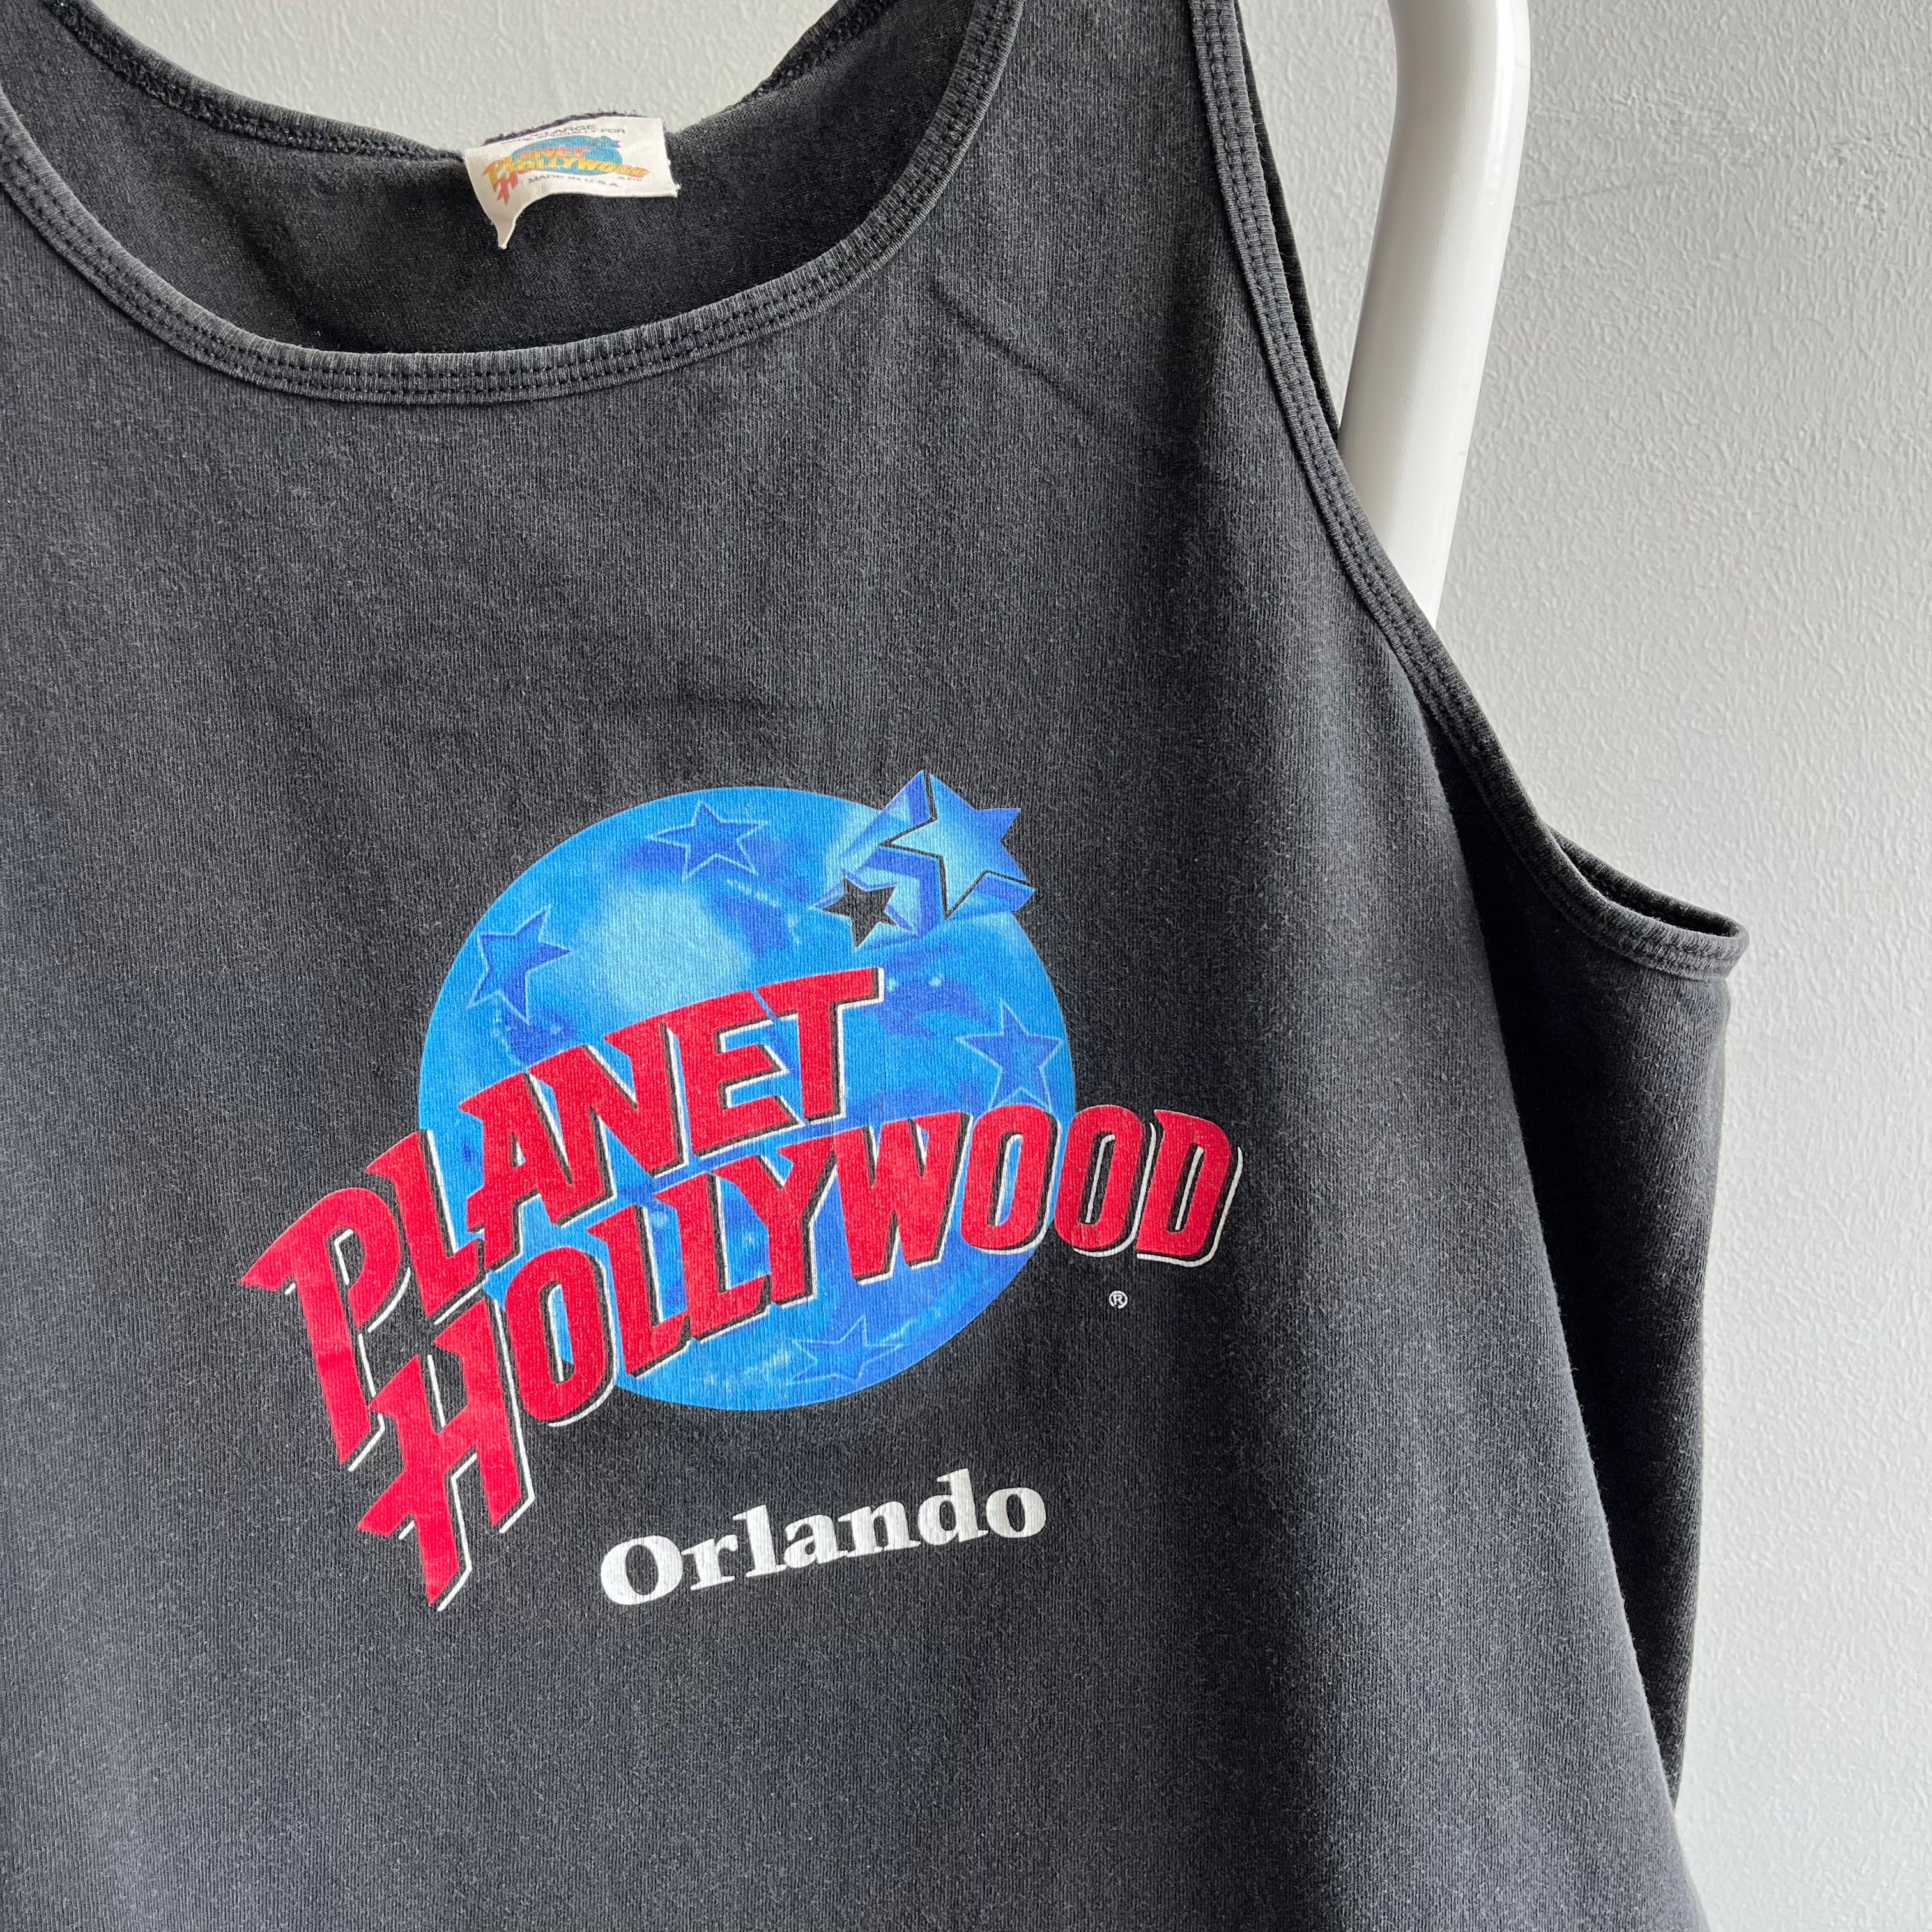 1980/90s Planet Hollywood Orlando Tank Top